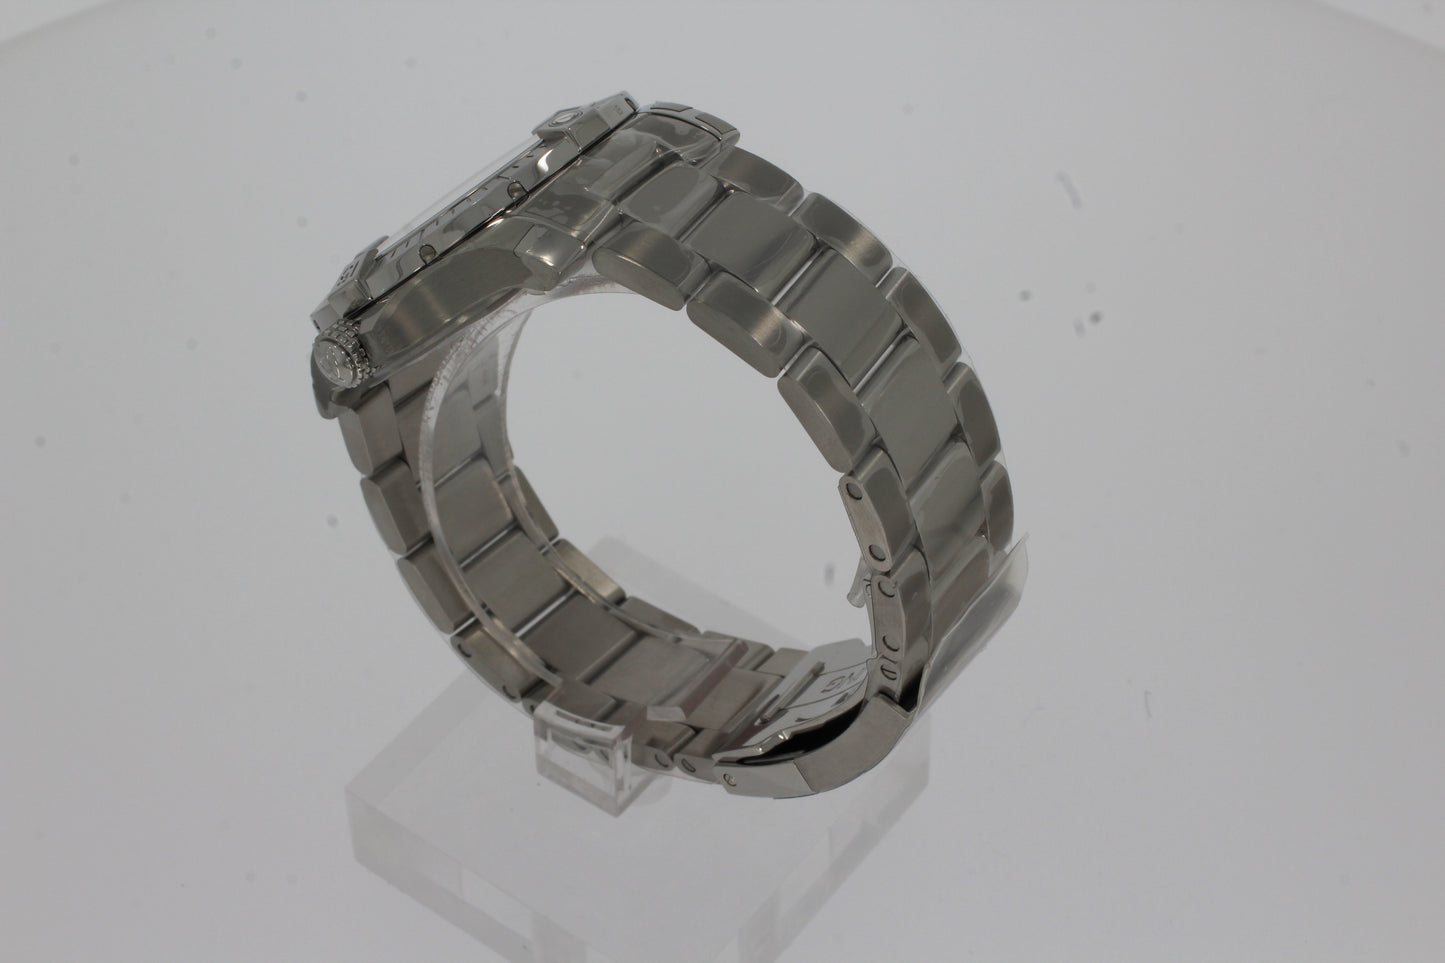 Breitling AVENGER AUTOMATIC Herren Uhr 43mm Edelstahl - Schwarz  A17318101B1A1